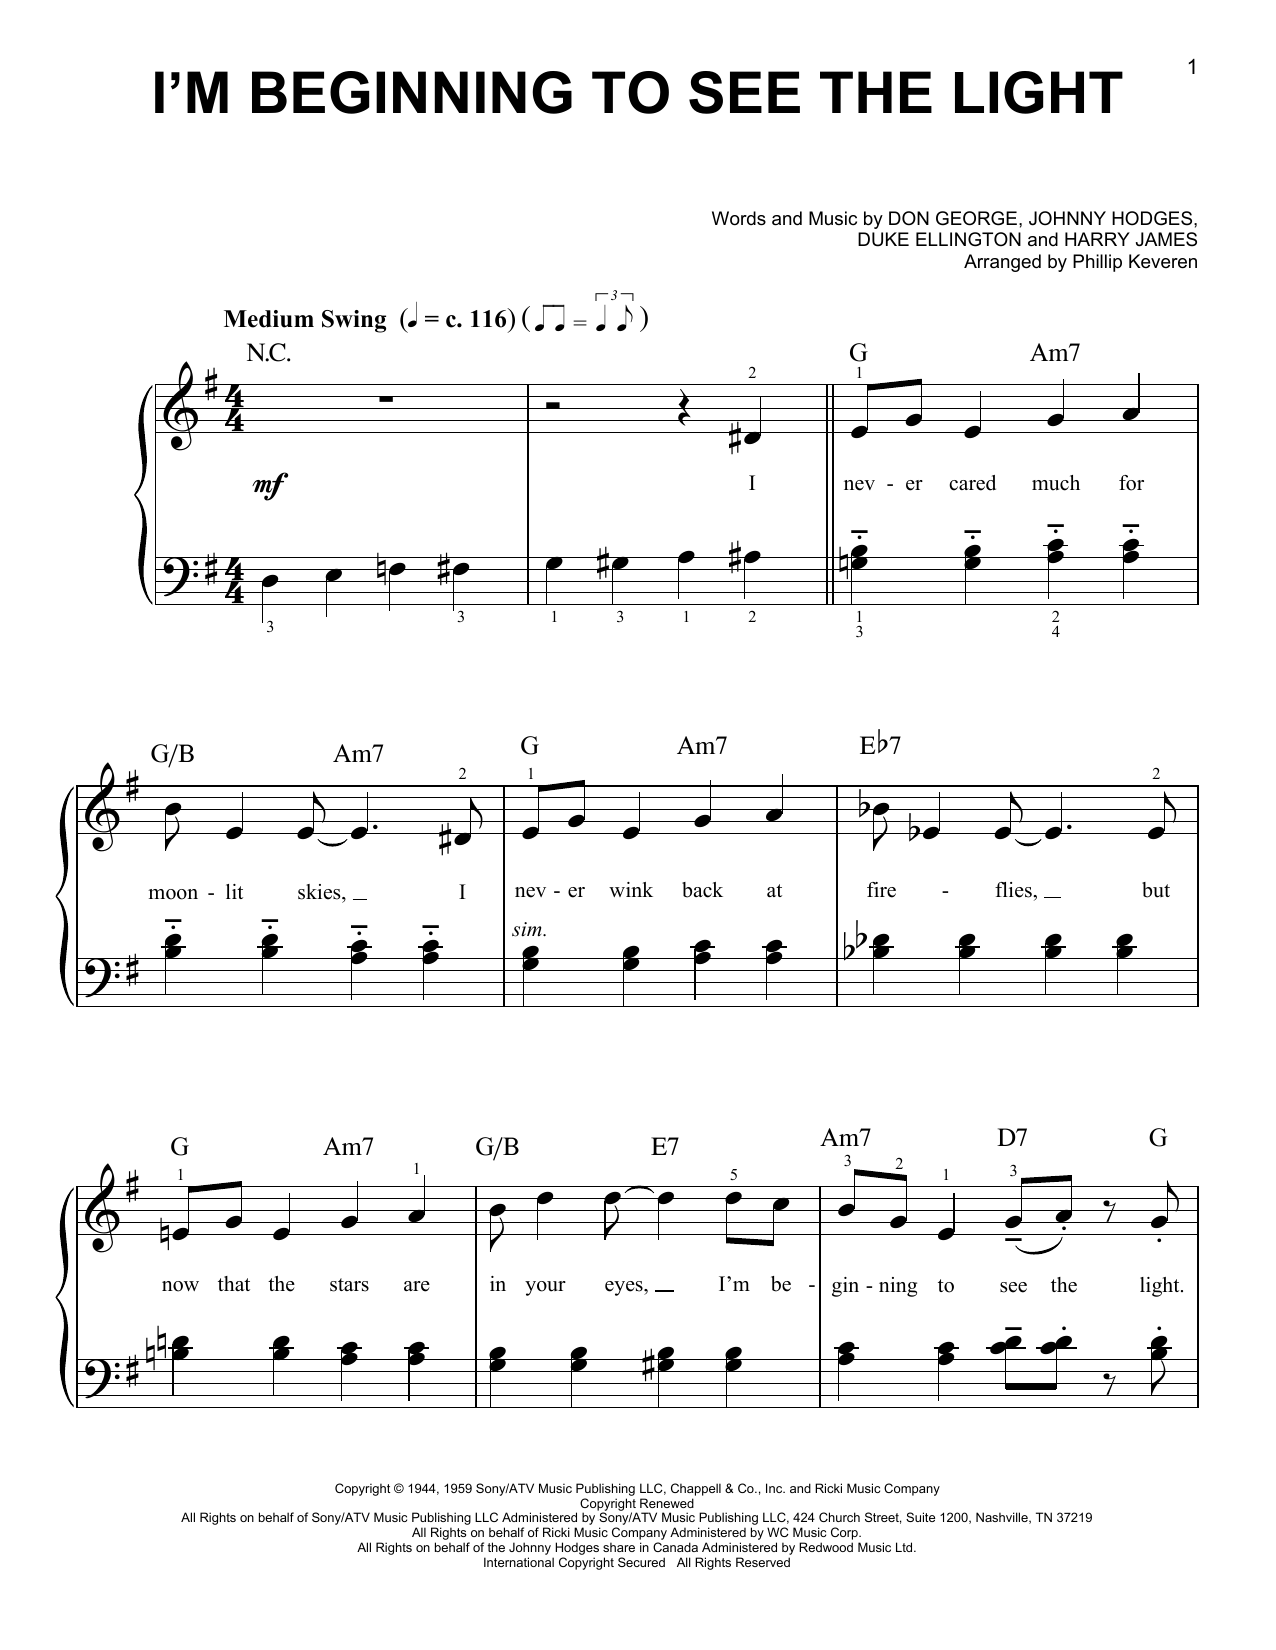 Duke Ellington I'm Beginning To See The Light (arr. Phillip Keveren) Sheet Music Notes & Chords for Easy Piano - Download or Print PDF